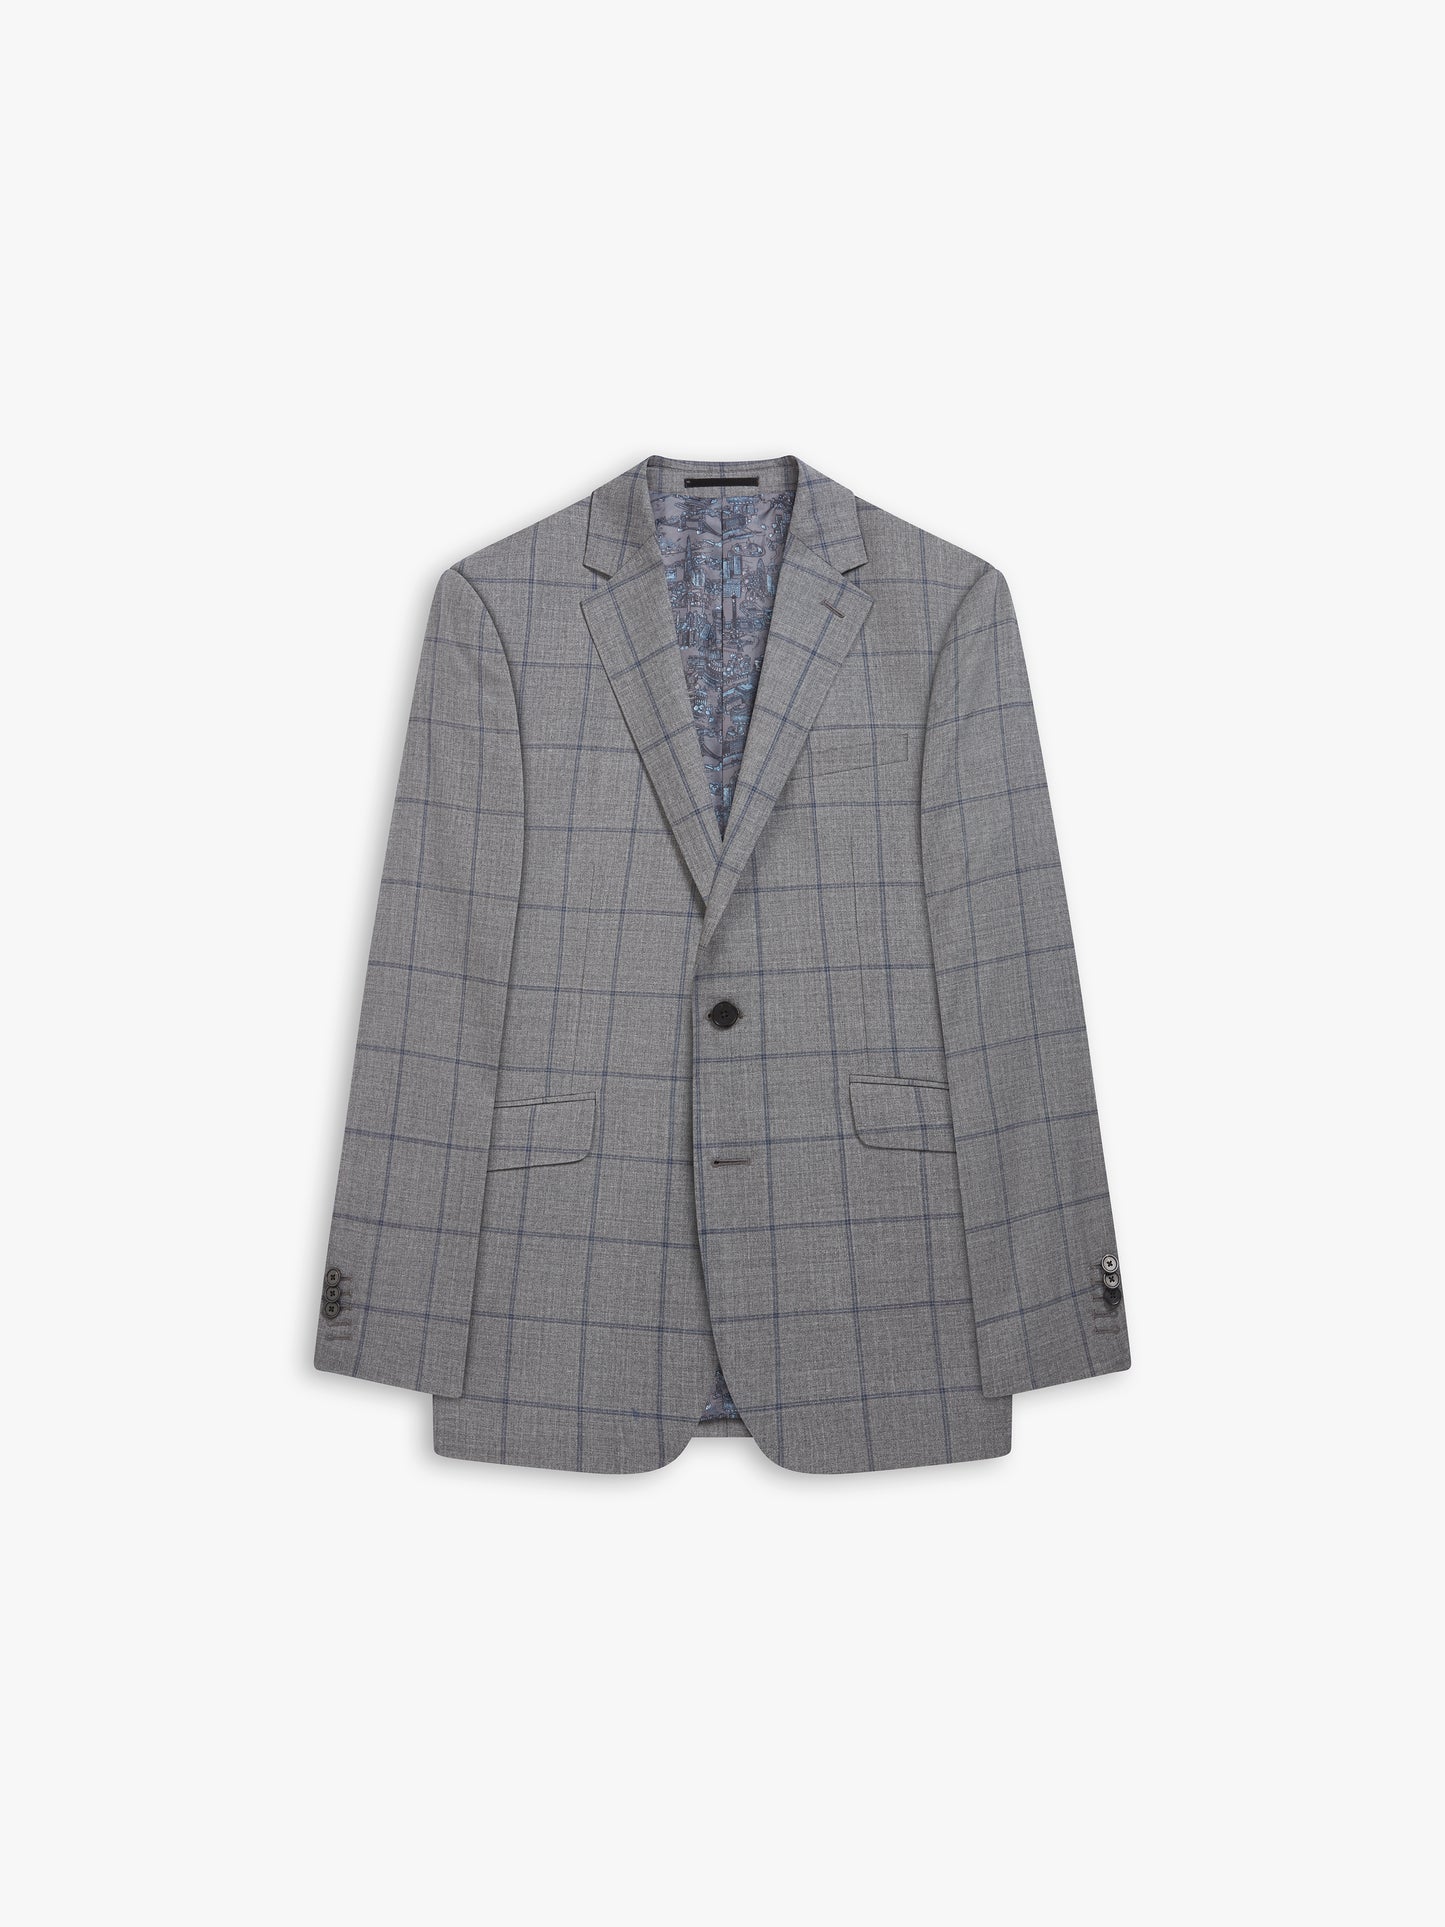 Niro Barberis Slim Fit Grey and Blue Windowpane Check Jacket